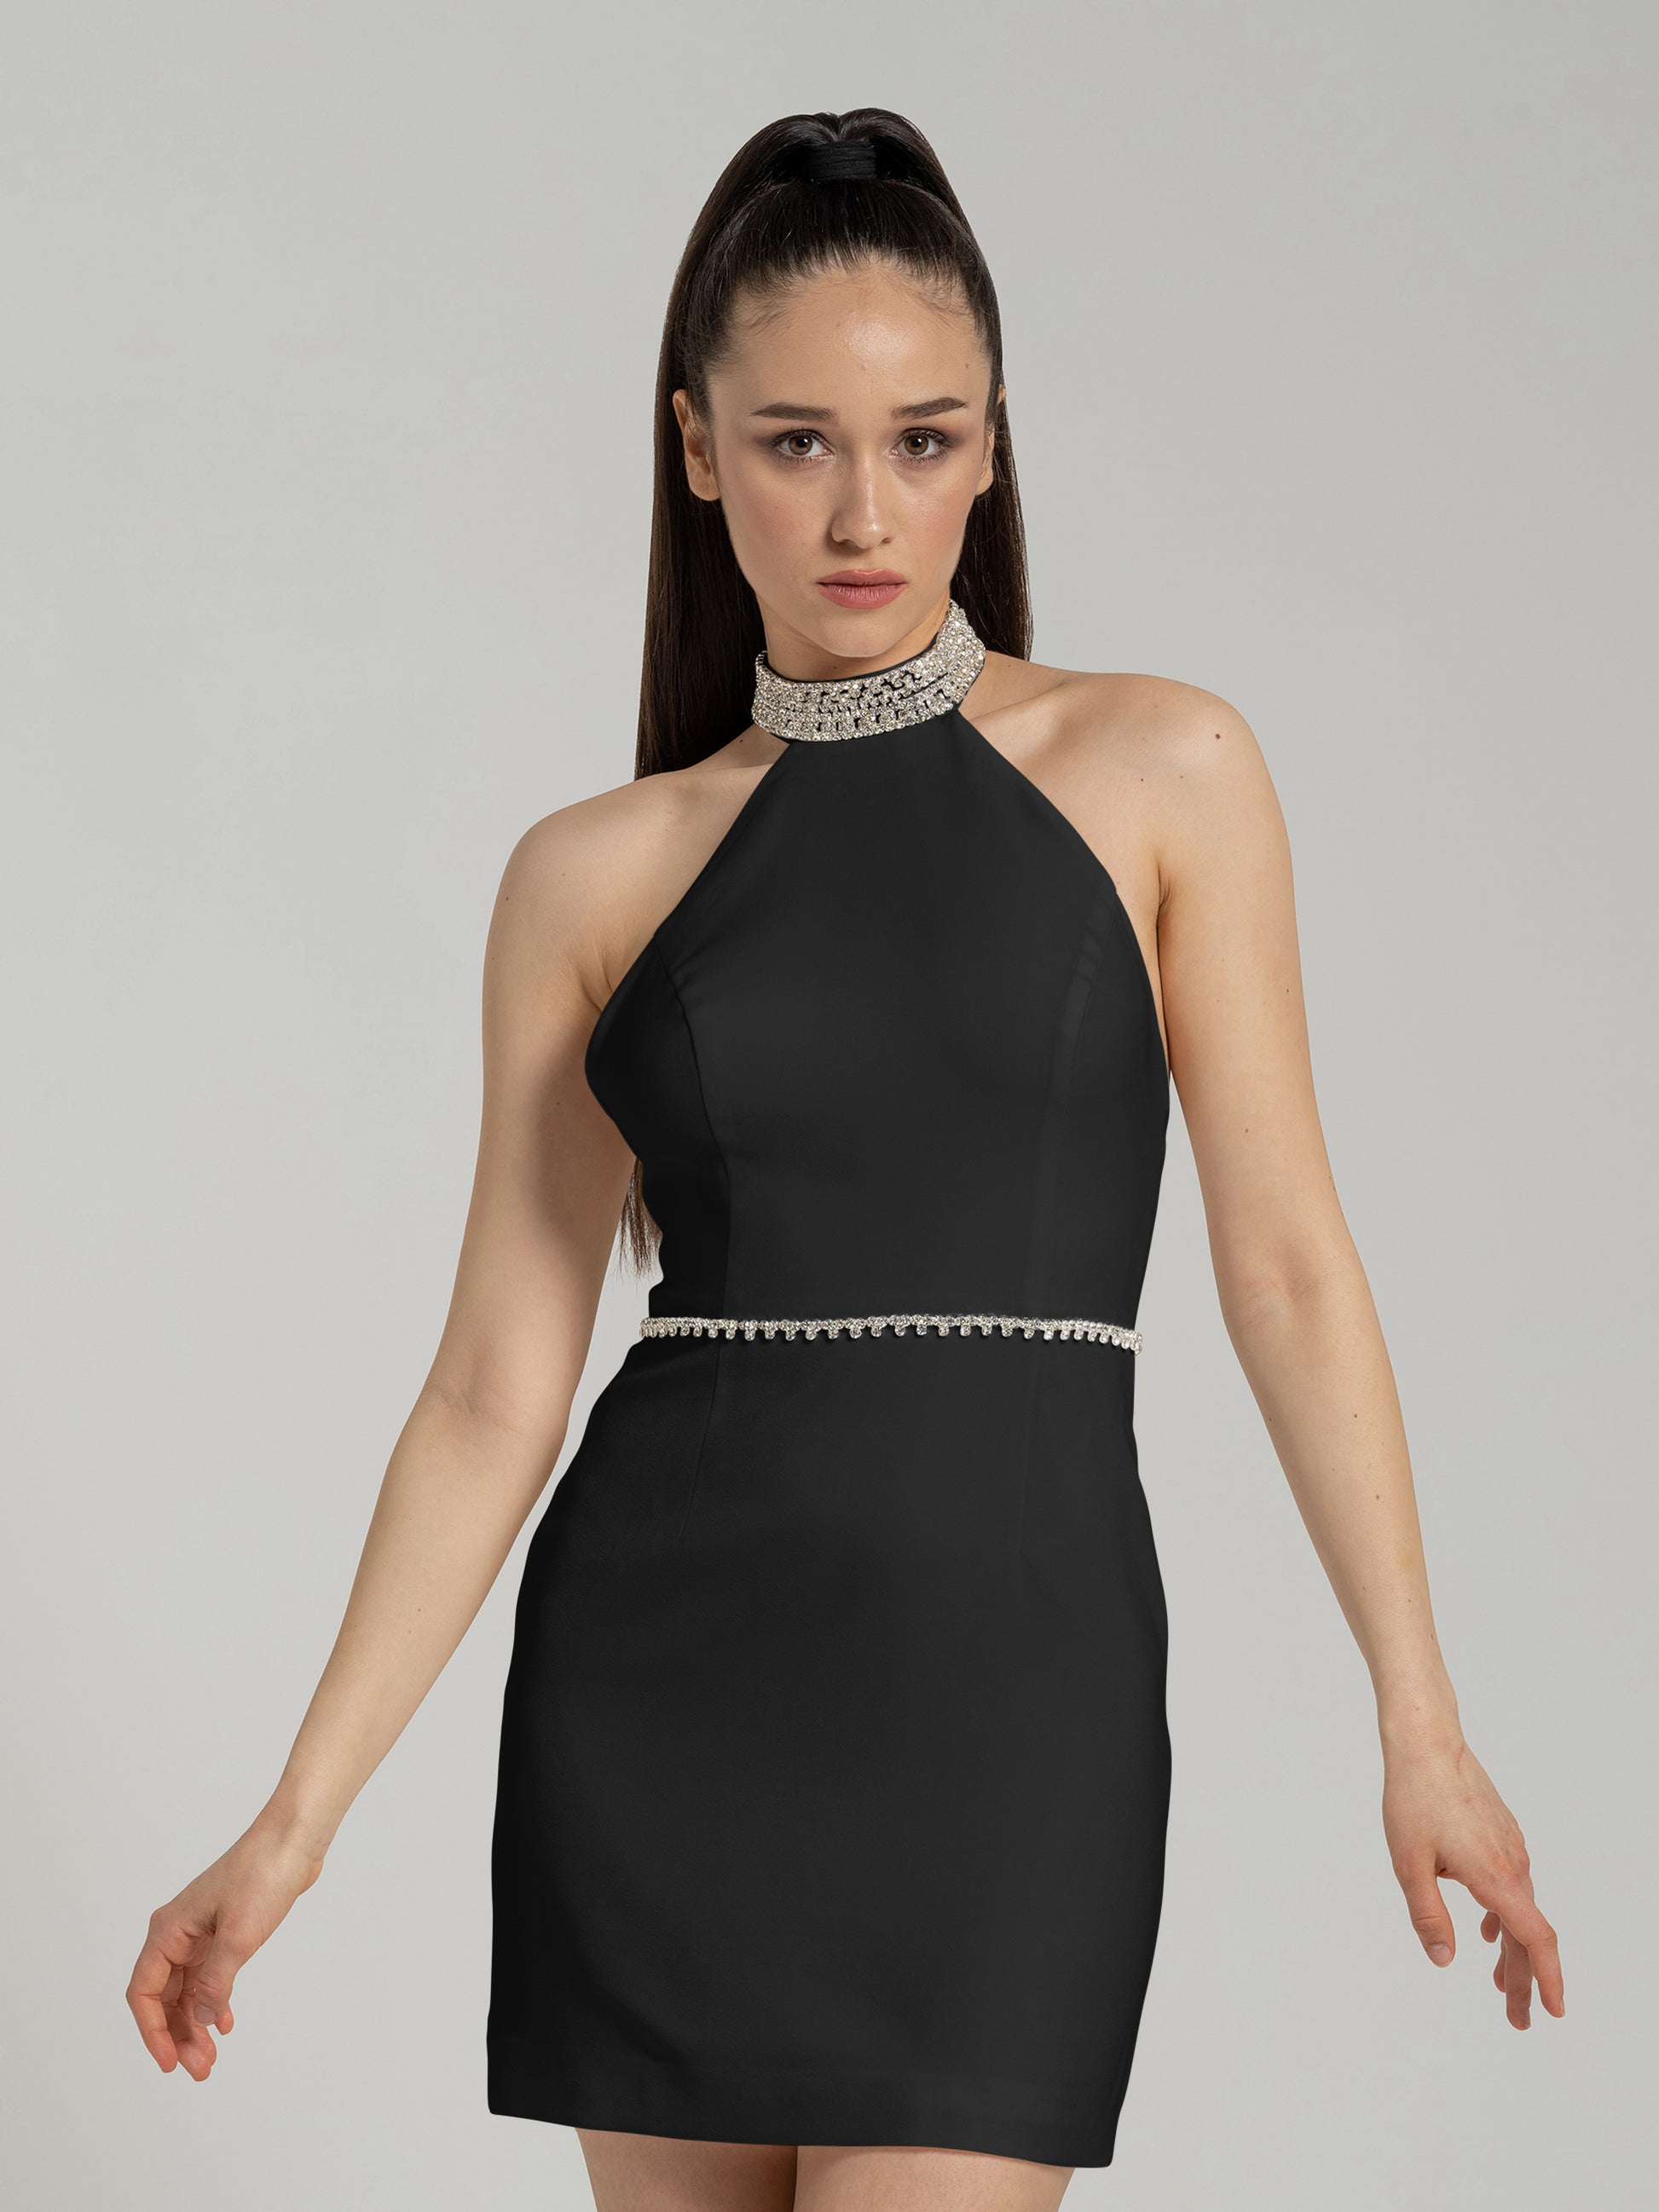 Fall in Love Crystal-Embellished Mini Dress - Black by Tia Dorraine Women's Luxury Fashion Designer Clothing Brand